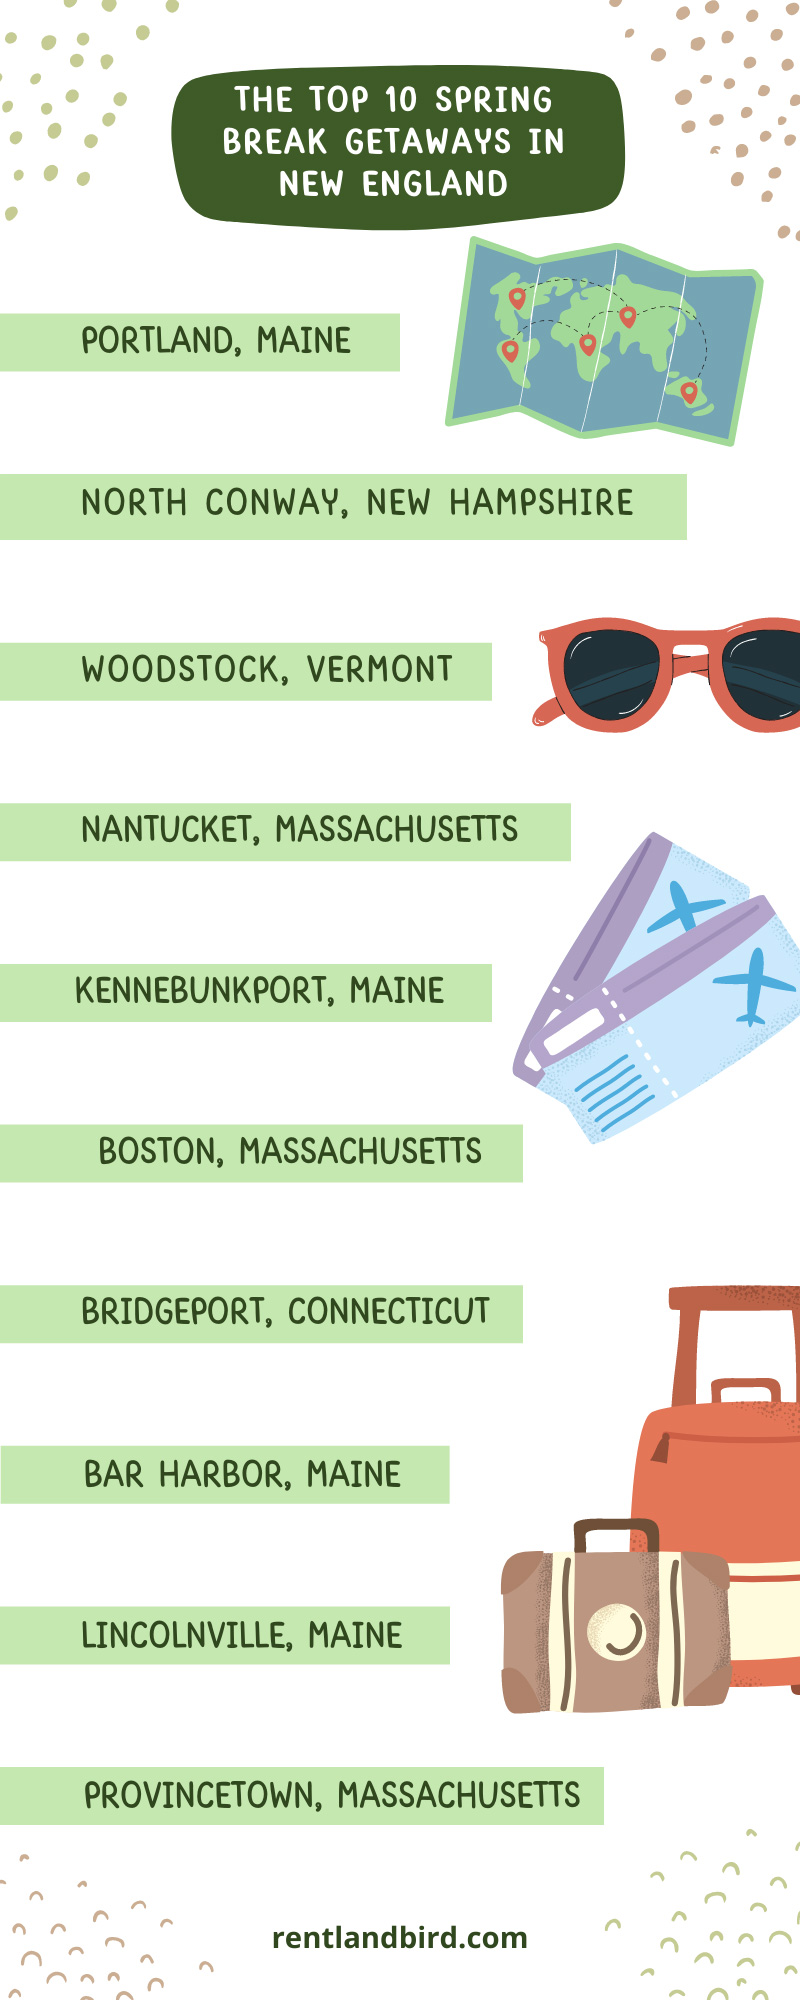 The Top 10 Spring Break Getaways in New England